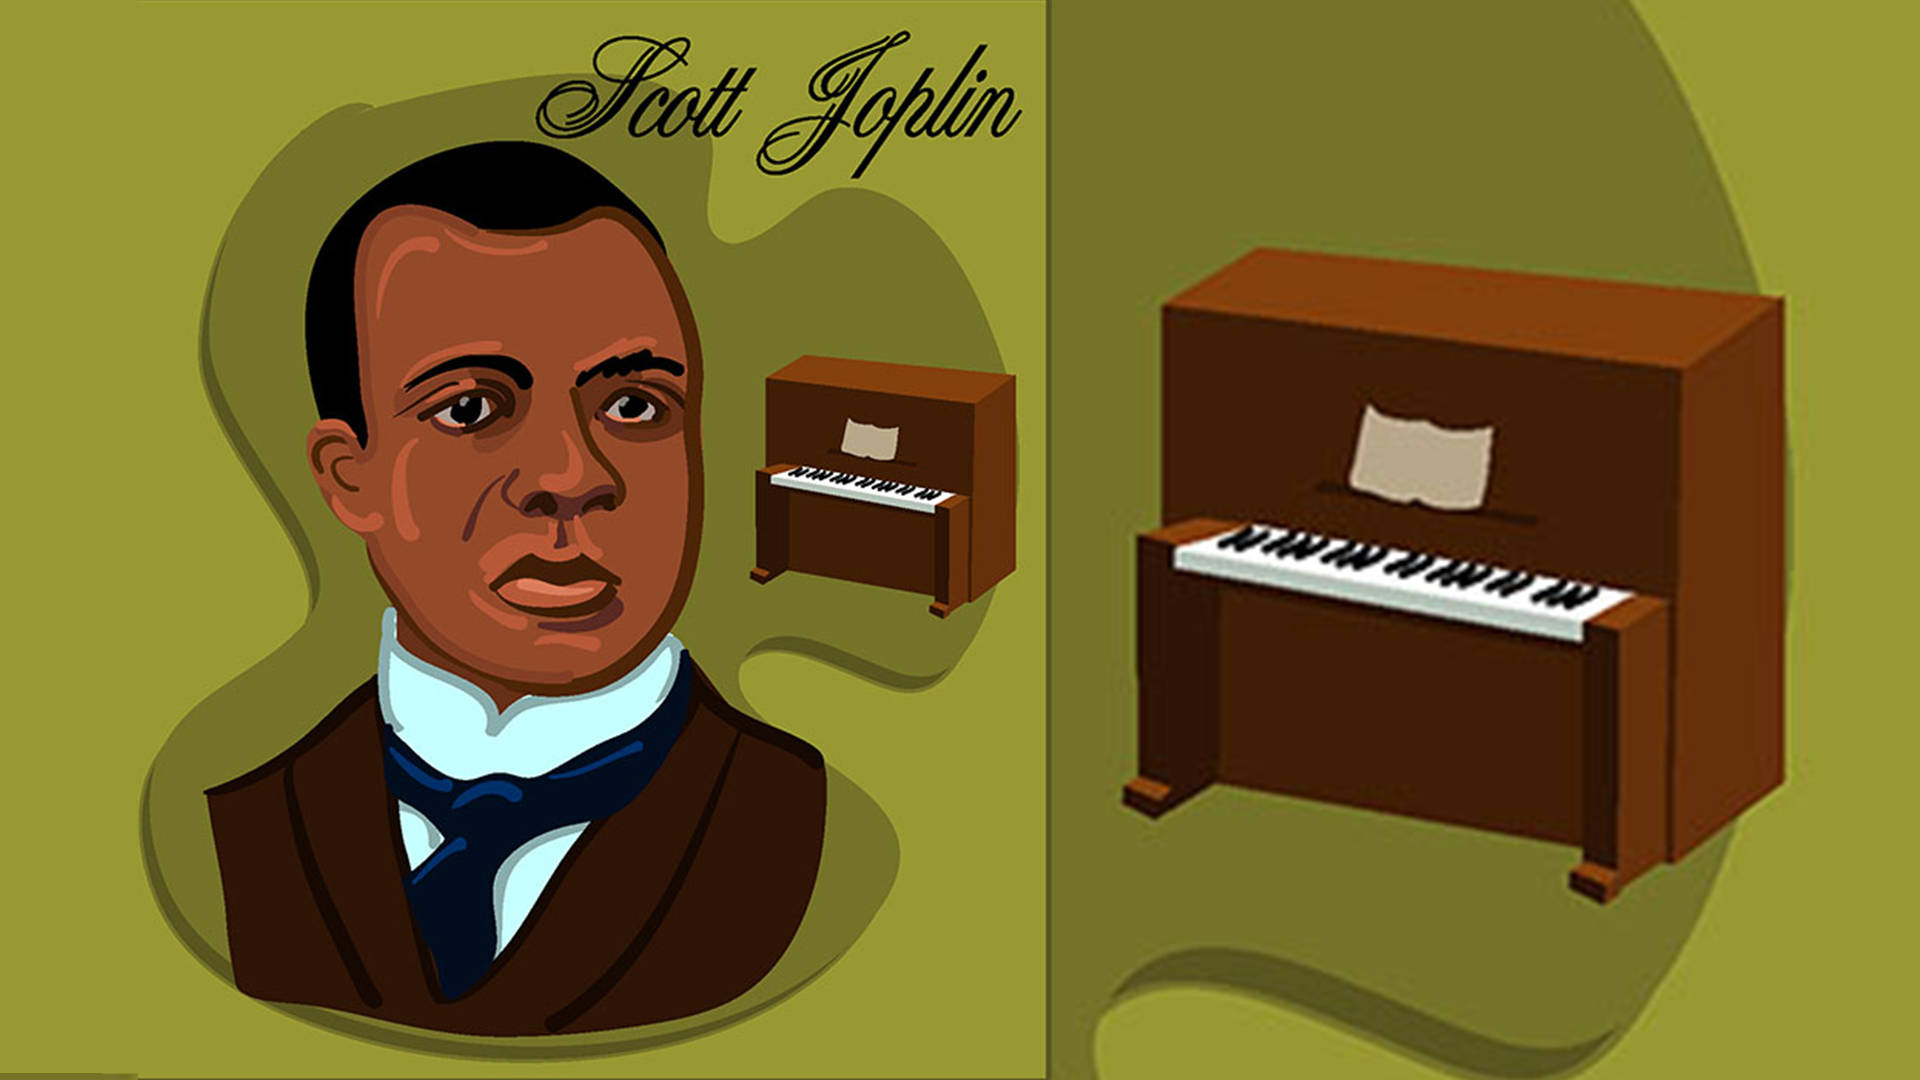 Scott Joplin Piano Digital Art Wallpaper